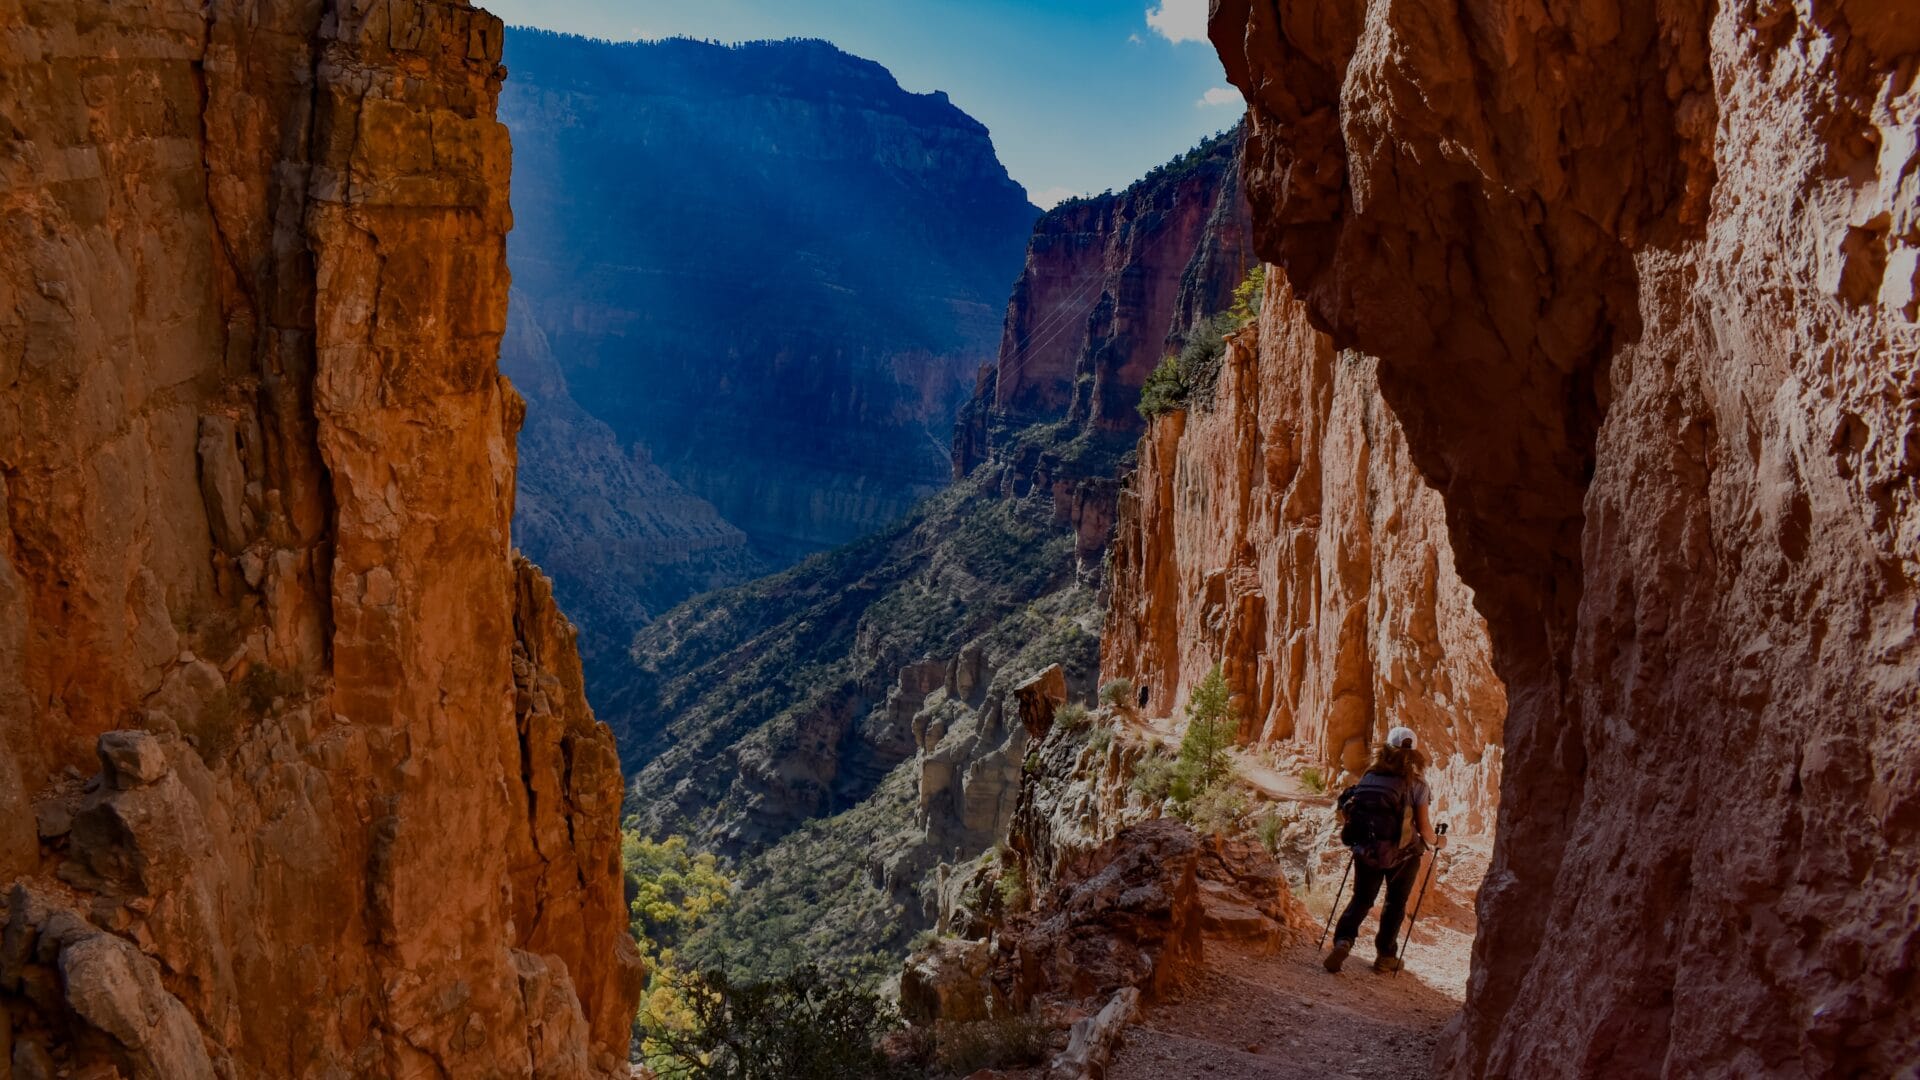 National park spotlight: Grand Canyon National Park